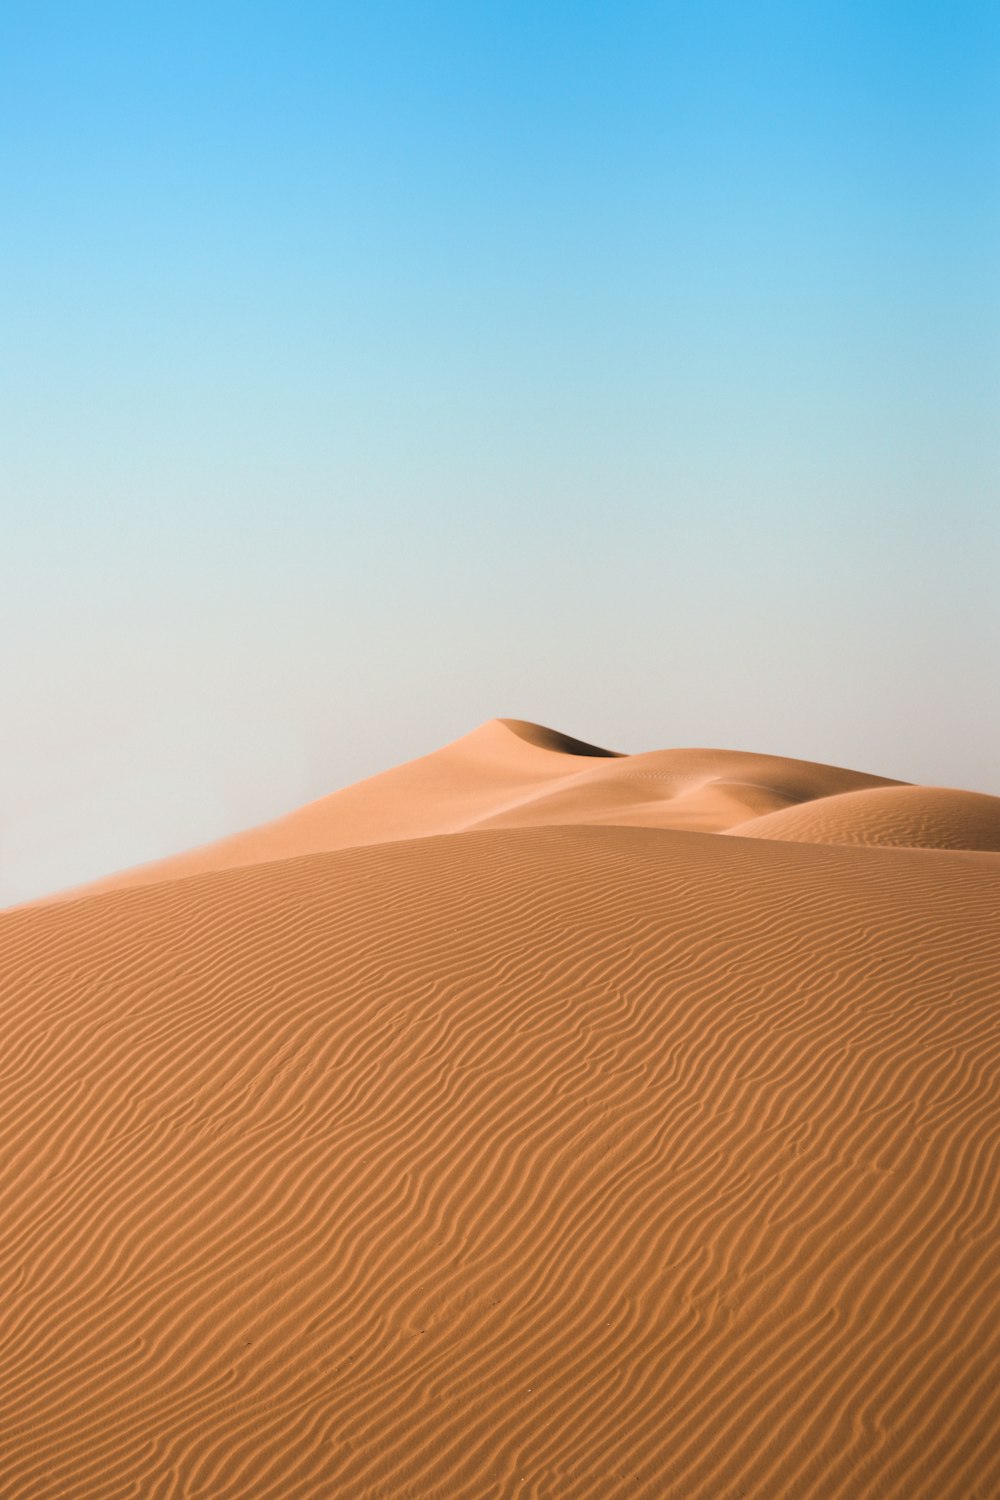 20+ Free Desert Pictures & Stock Photos on Unsplash